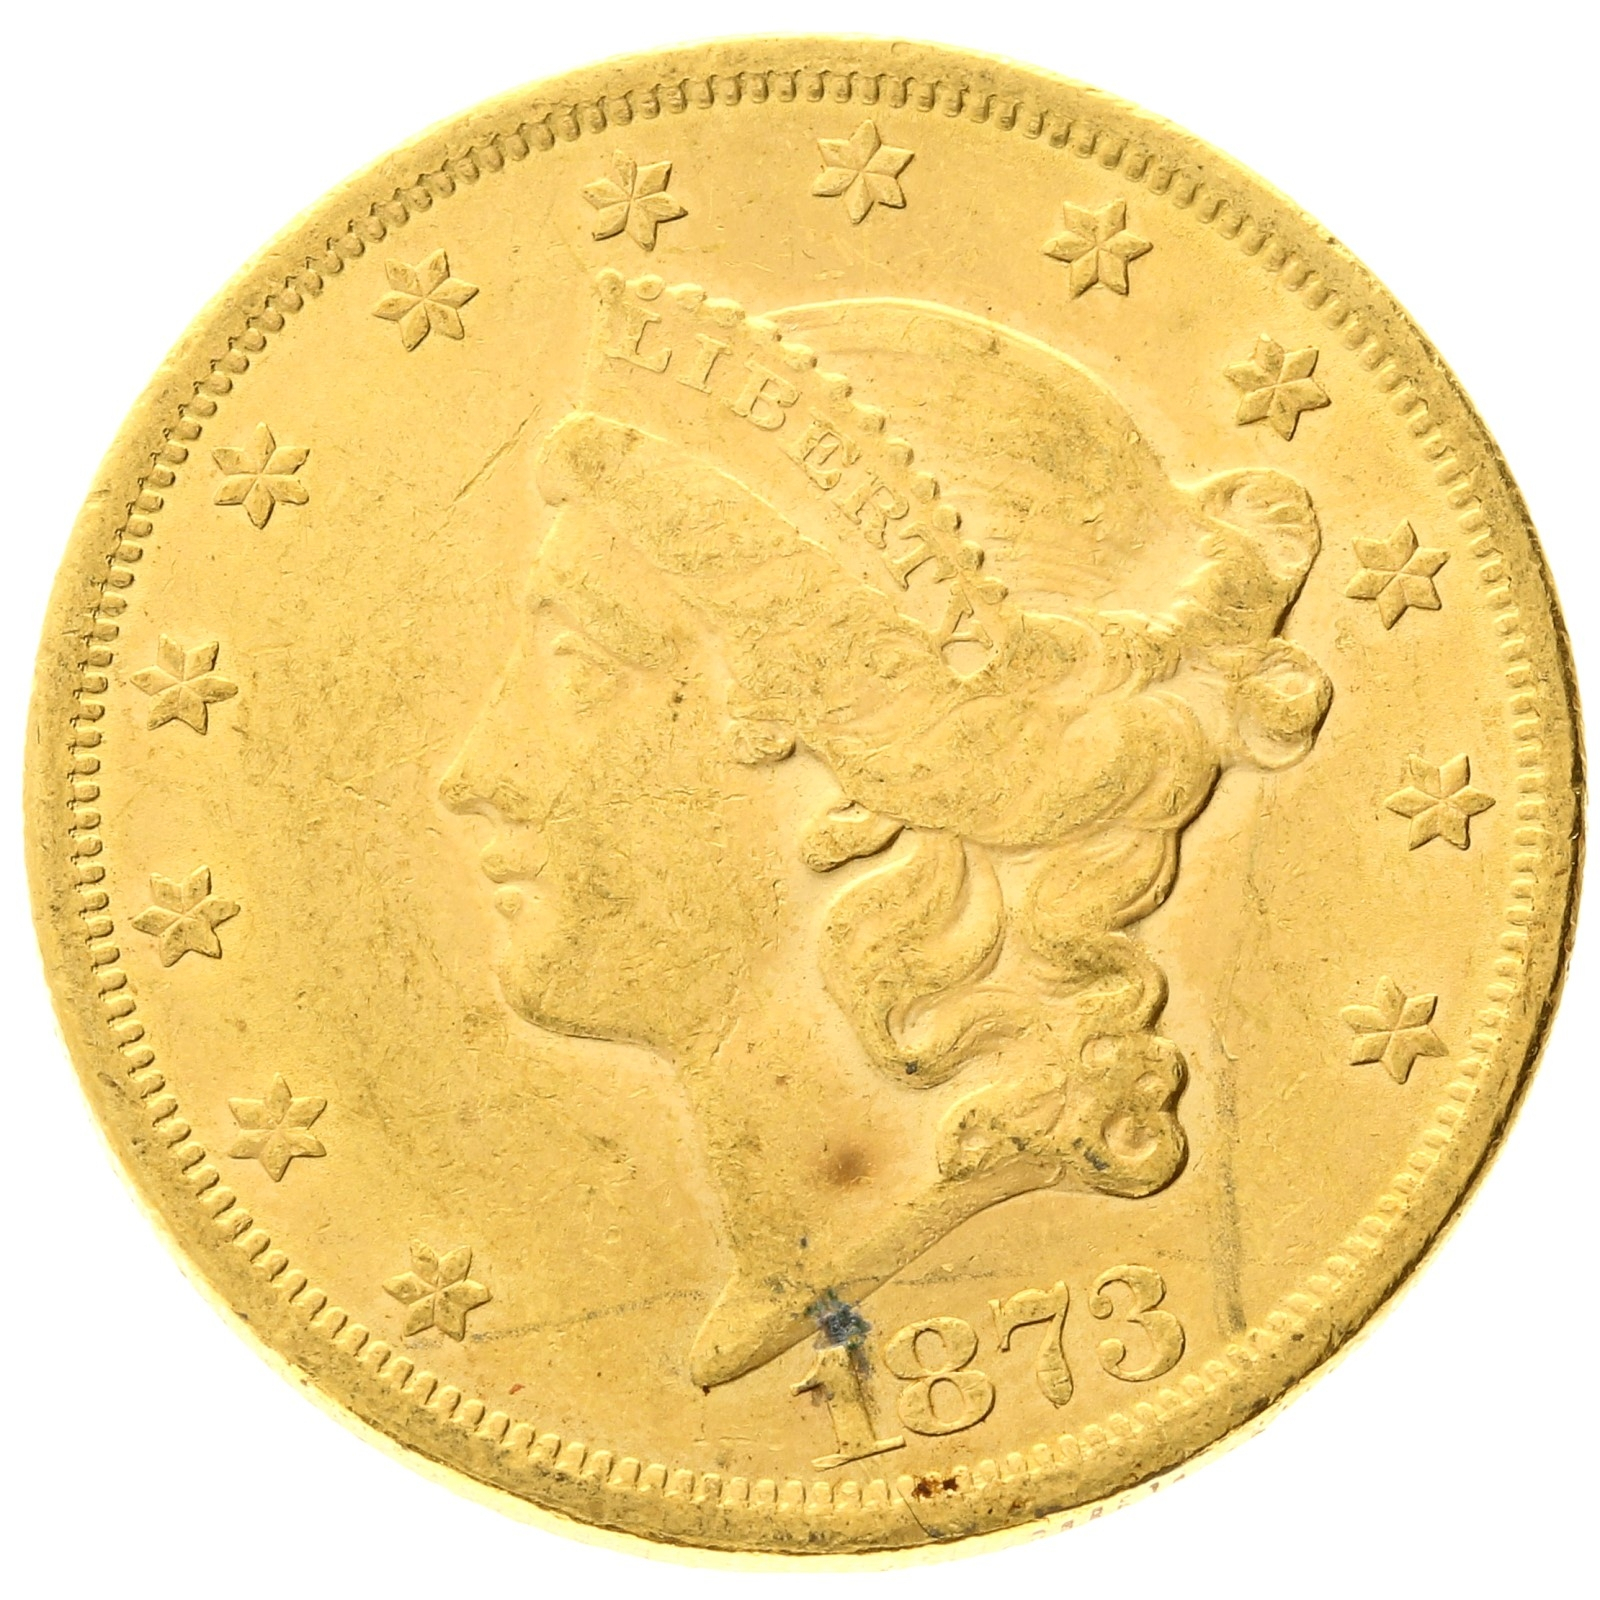 USA - 20 dollars 1873 - Open 3 - Liberty head